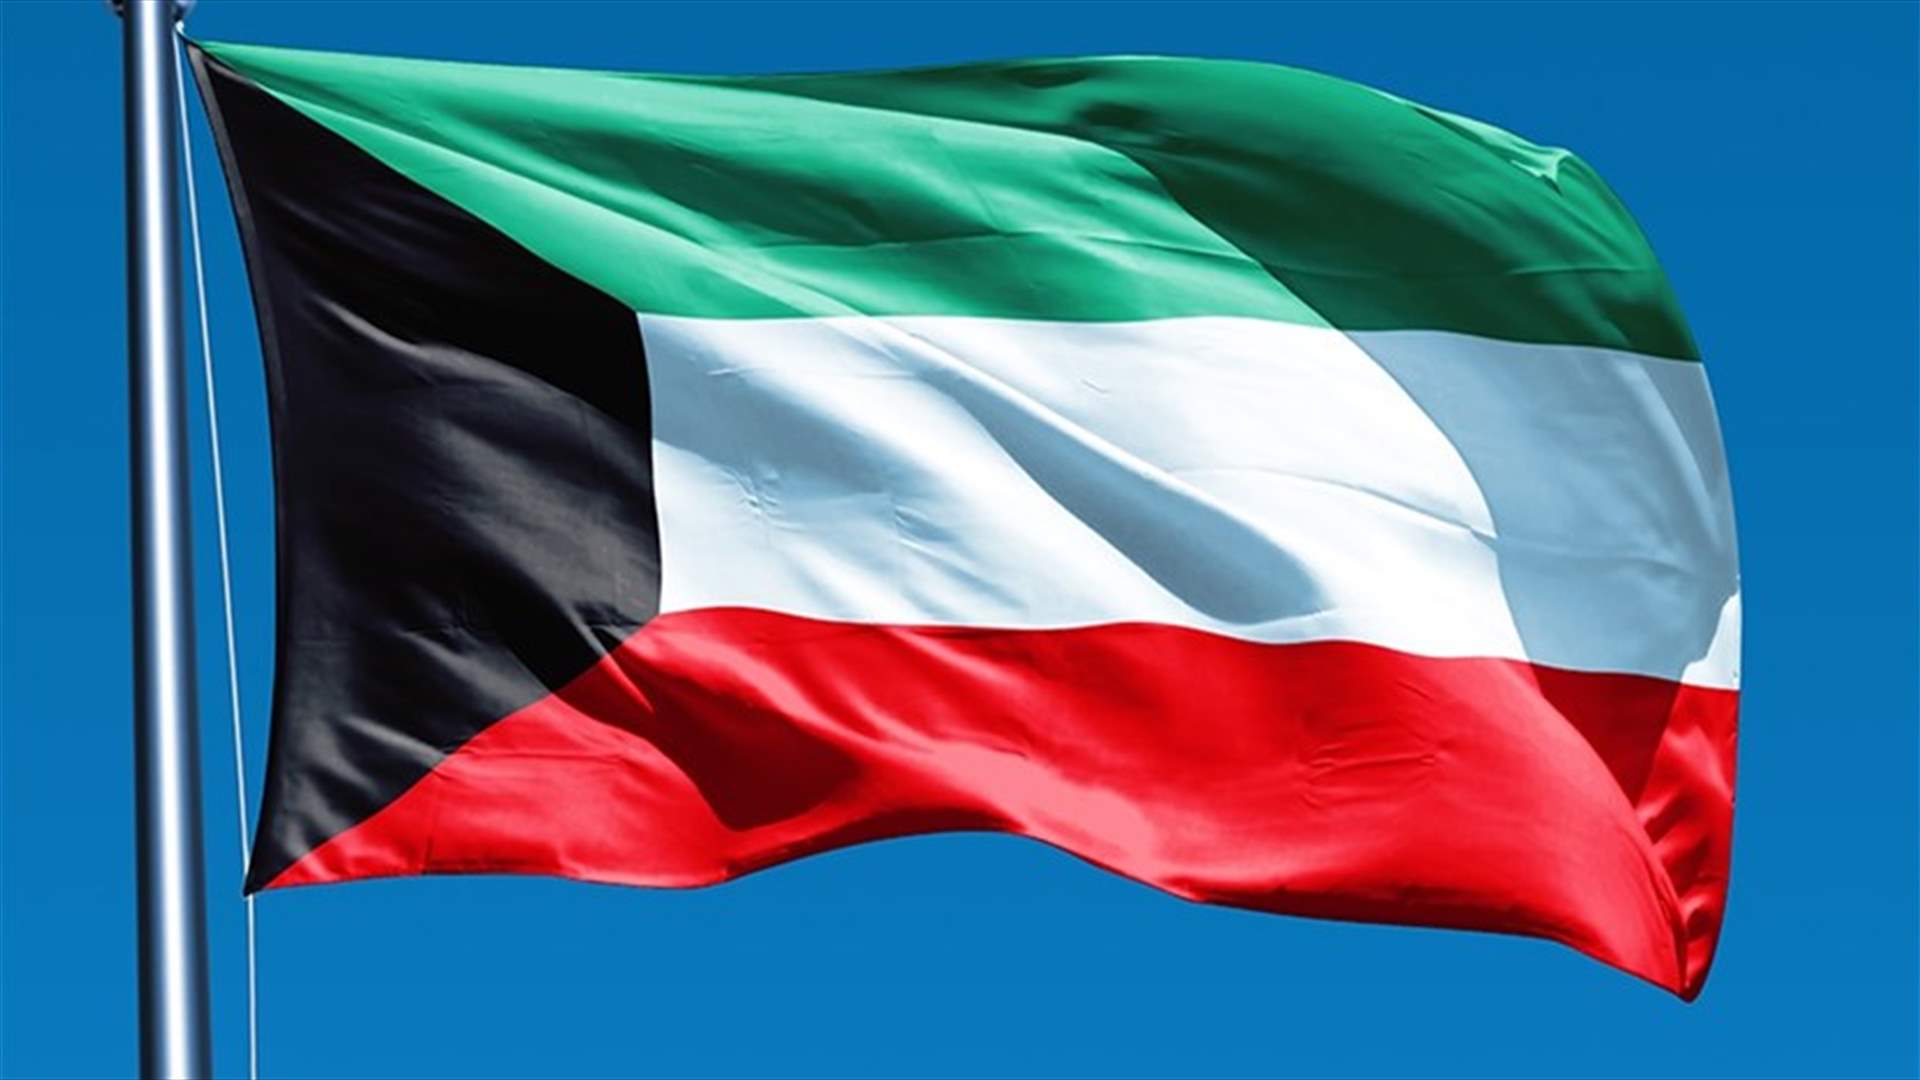  Kuwait to send troops to Saudi Arabia to fight Yemen rebels - newspaper